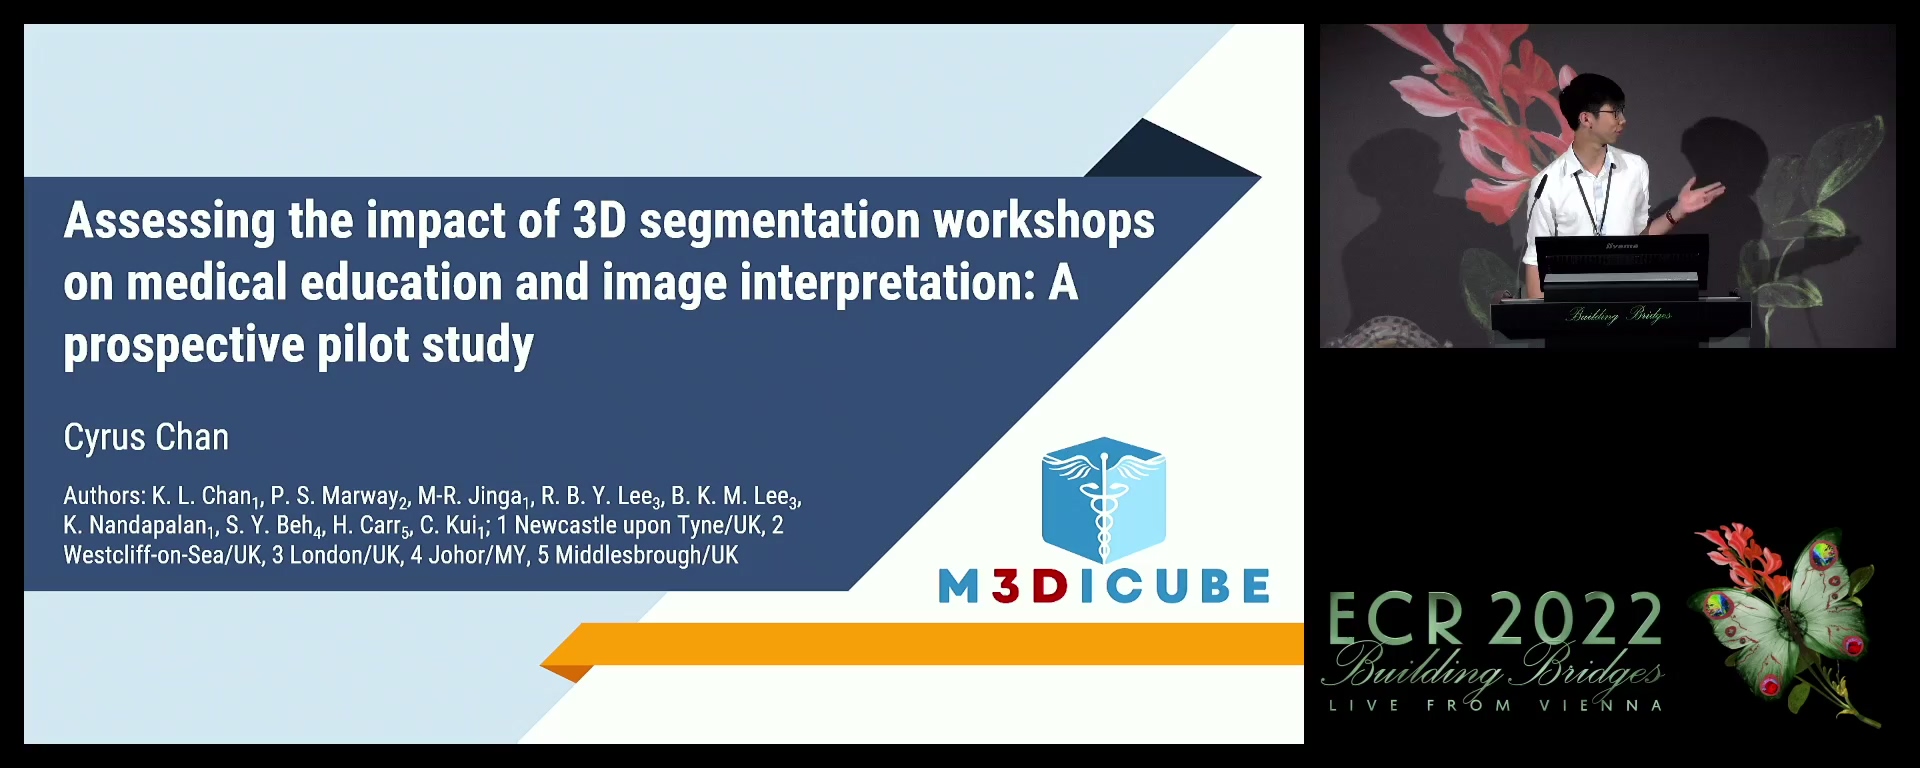 Assessing the impact of 3D segmentation workshops on medical education and image interpretation: A prospective pilot study - Kai Lok Chan, Newcastle upon Tyne / UK